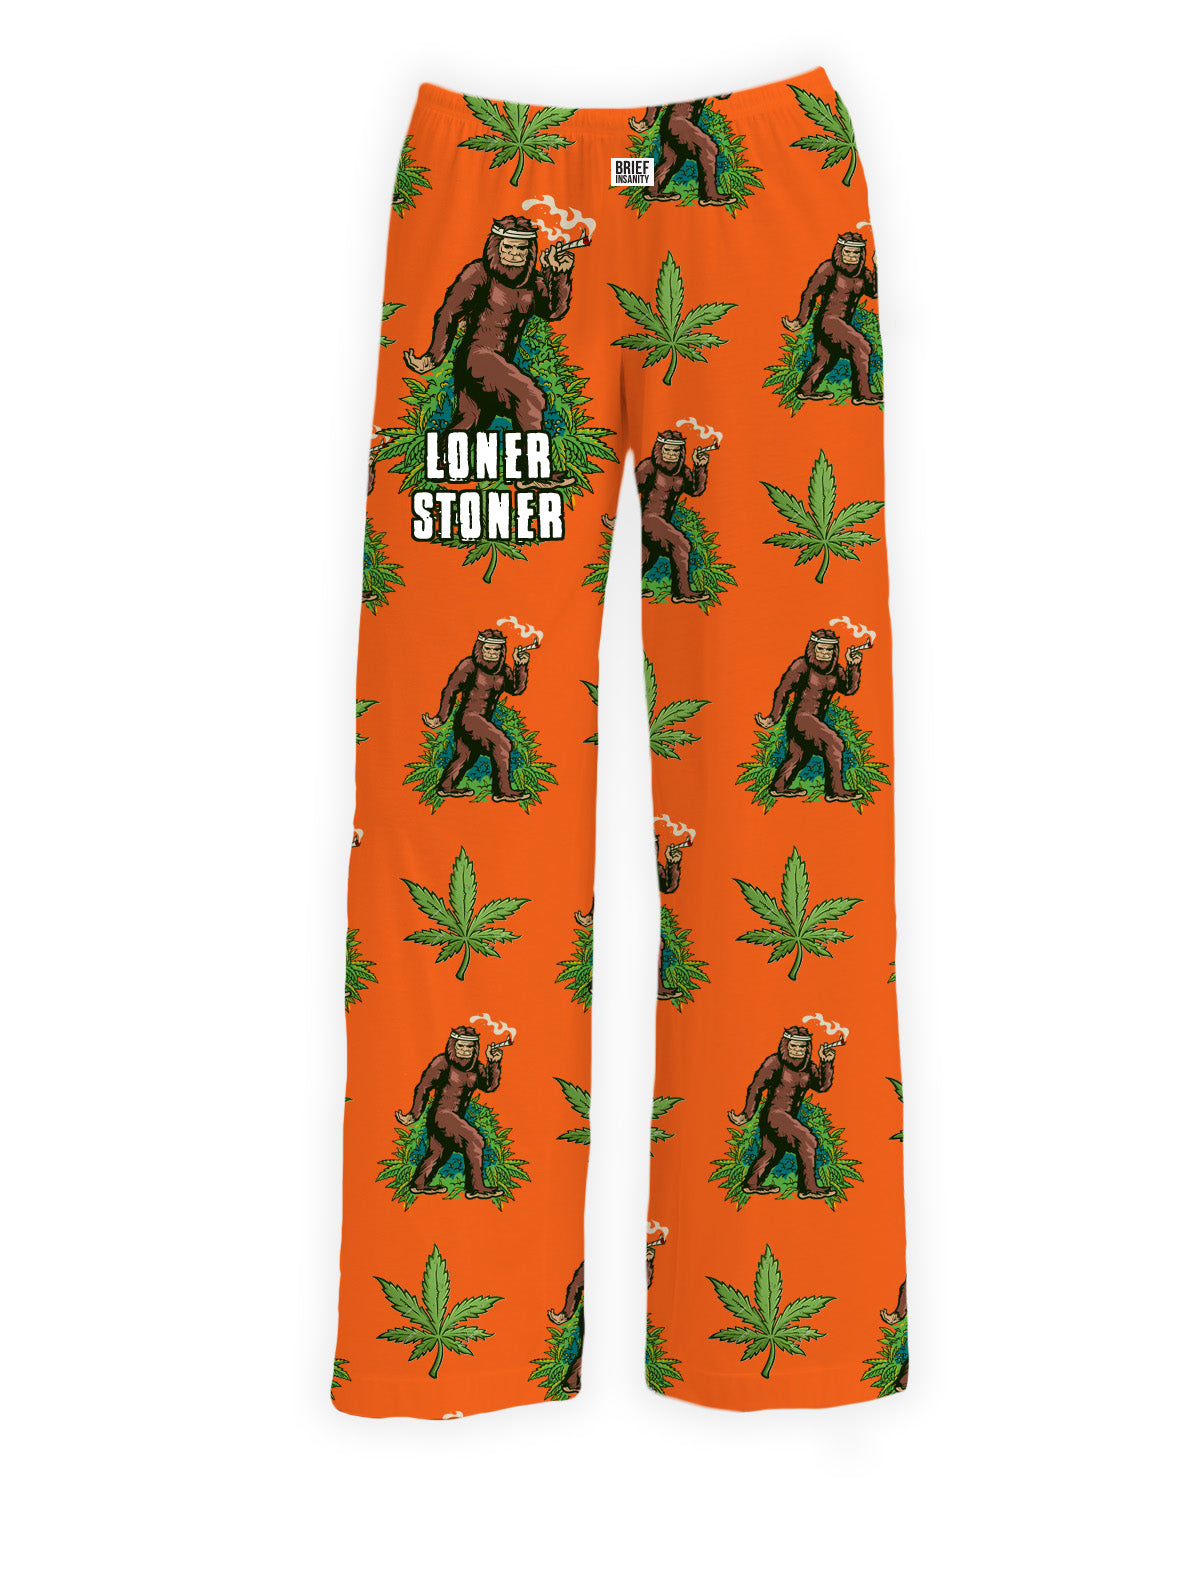 BRIEF INSANITY Loner Stoner Bigfoot Marijuana Pajama Pants (NEW)